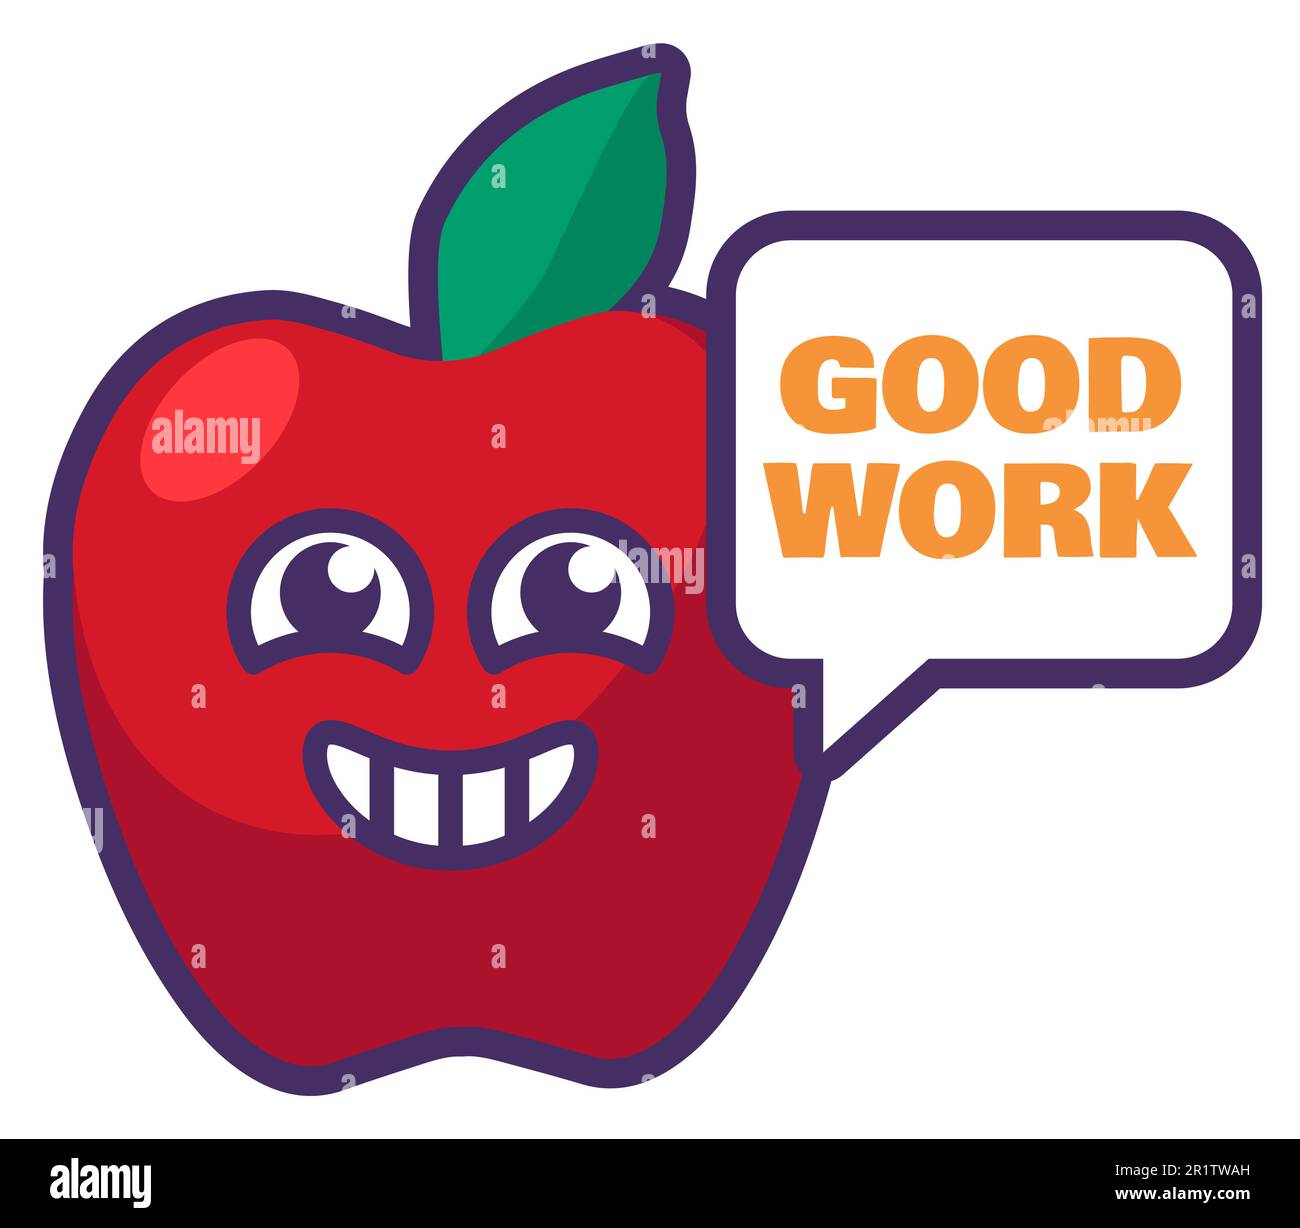 https://c8.alamy.com/comp/2R1TWAH/good-work-reward-sign-school-appreciation-mark-label-with-funny-smiling-apple-sticker-with-job-mark-for-teacher-cartoon-school-award-vector-illust-2R1TWAH.jpg